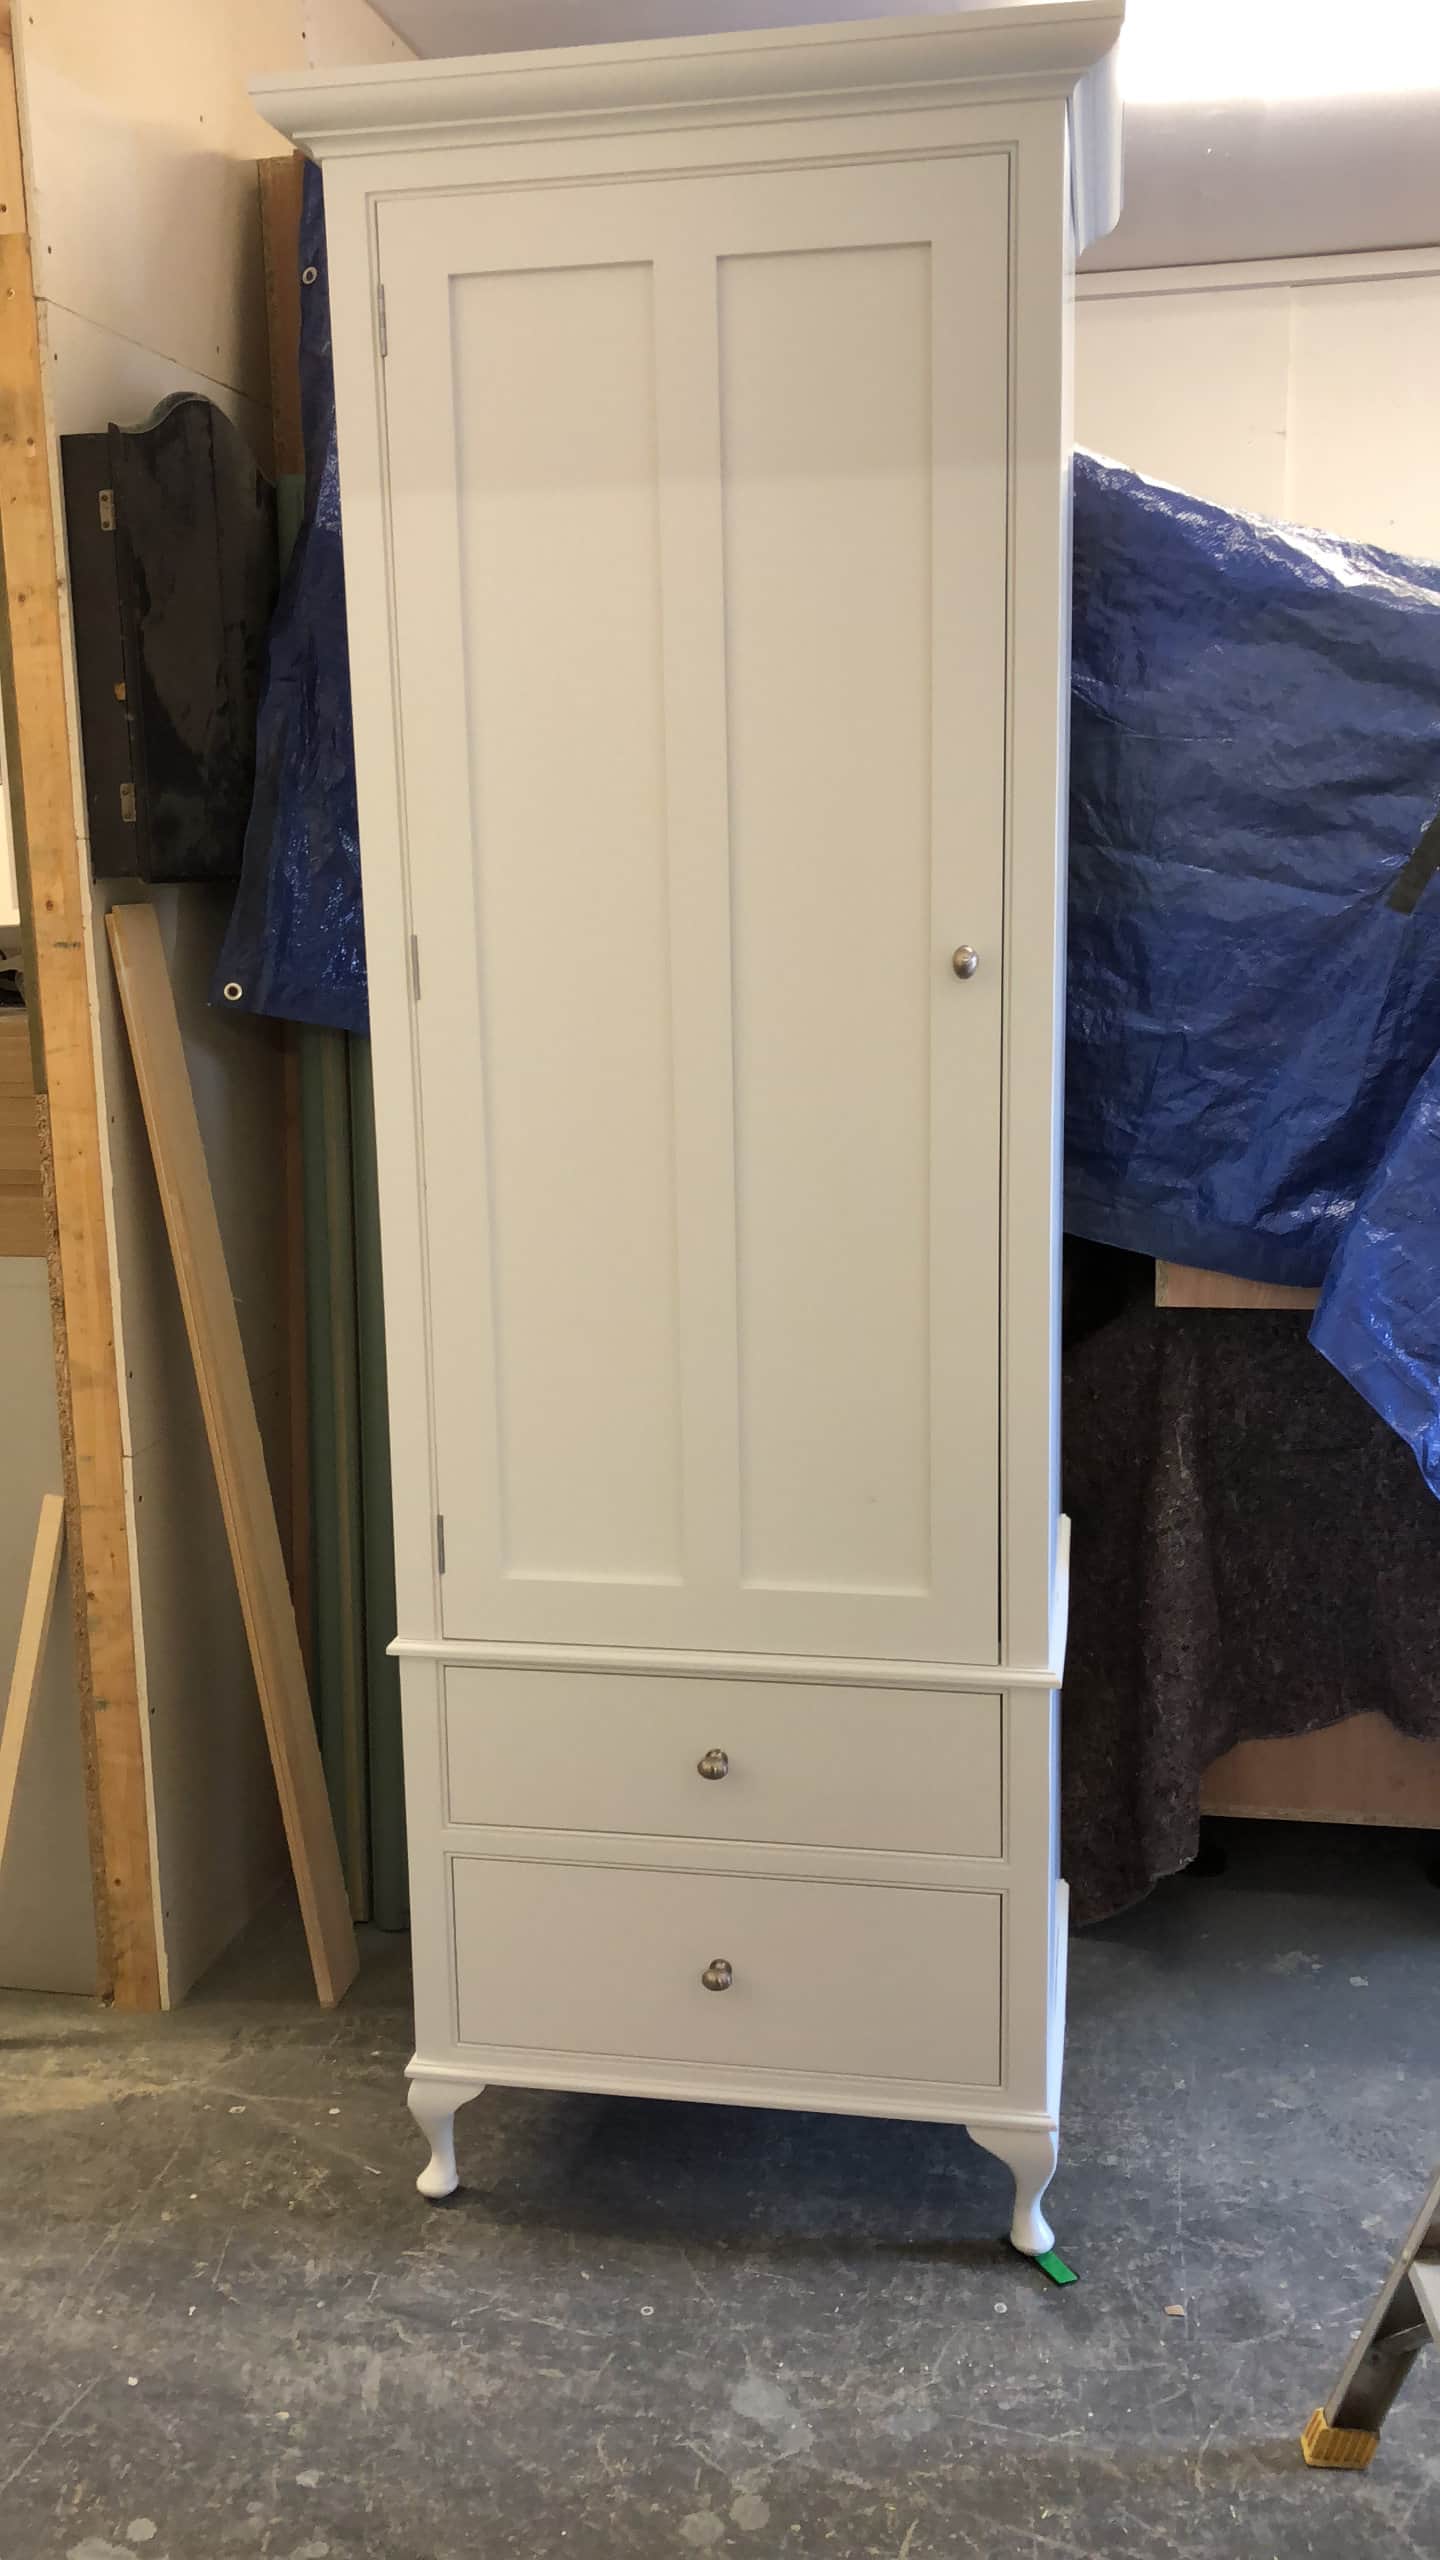 A white, bespoke freestanding wardrobe